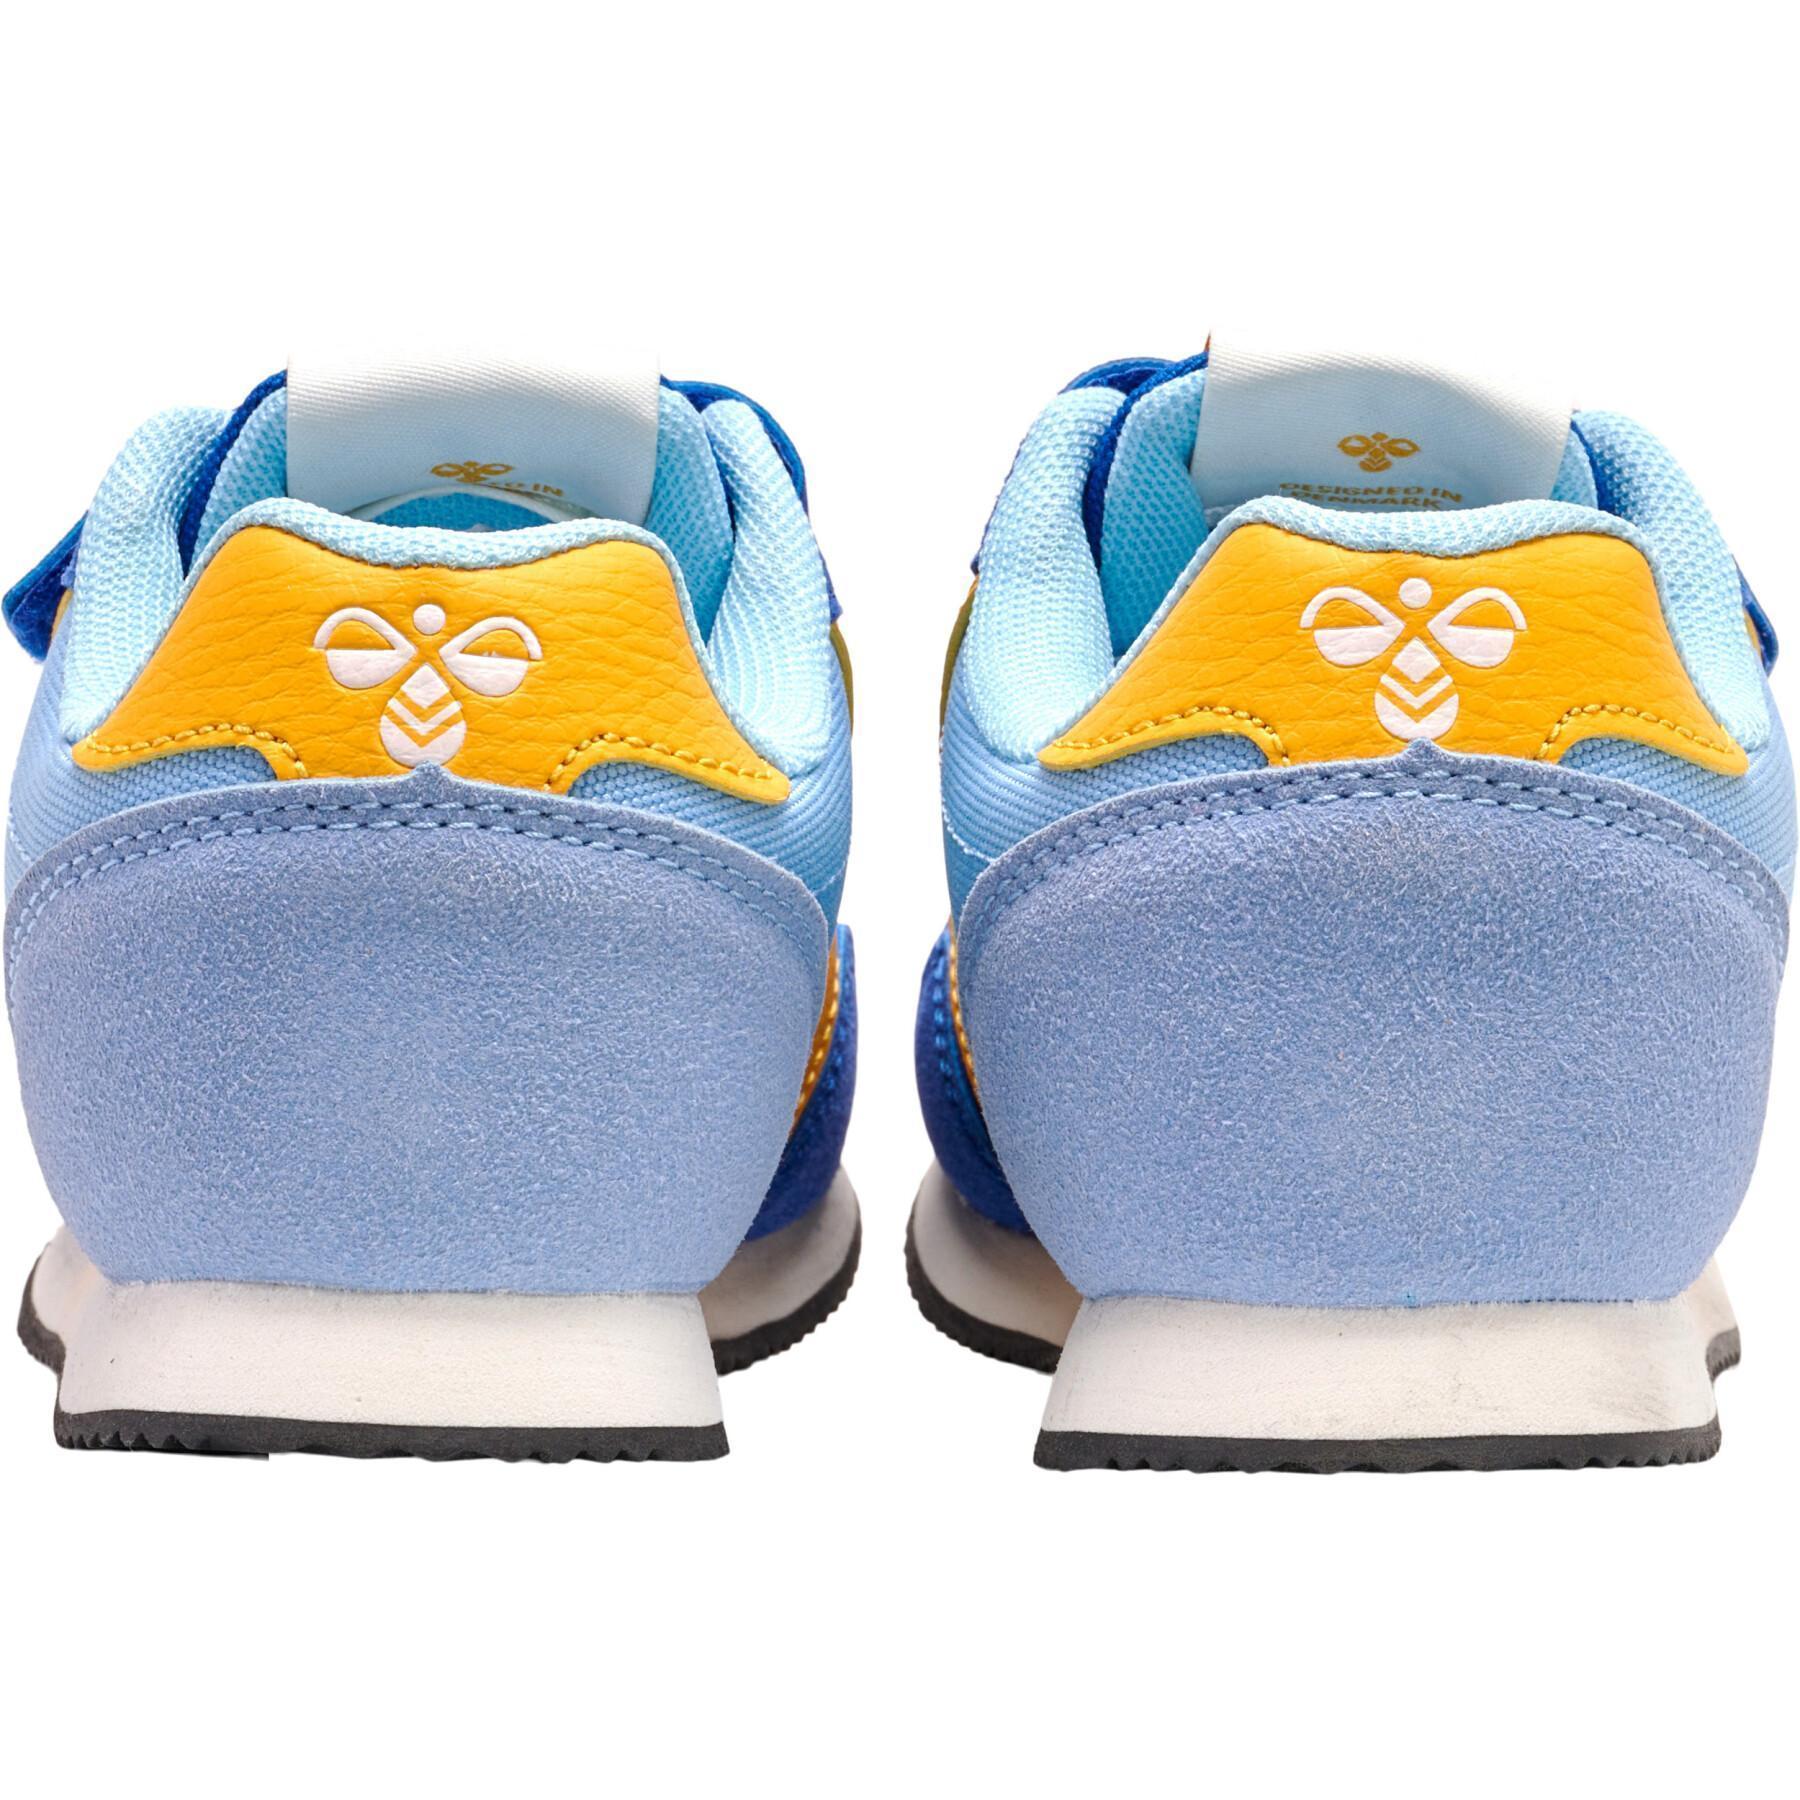 Children's sneakers Hummel Reflex Double Multi